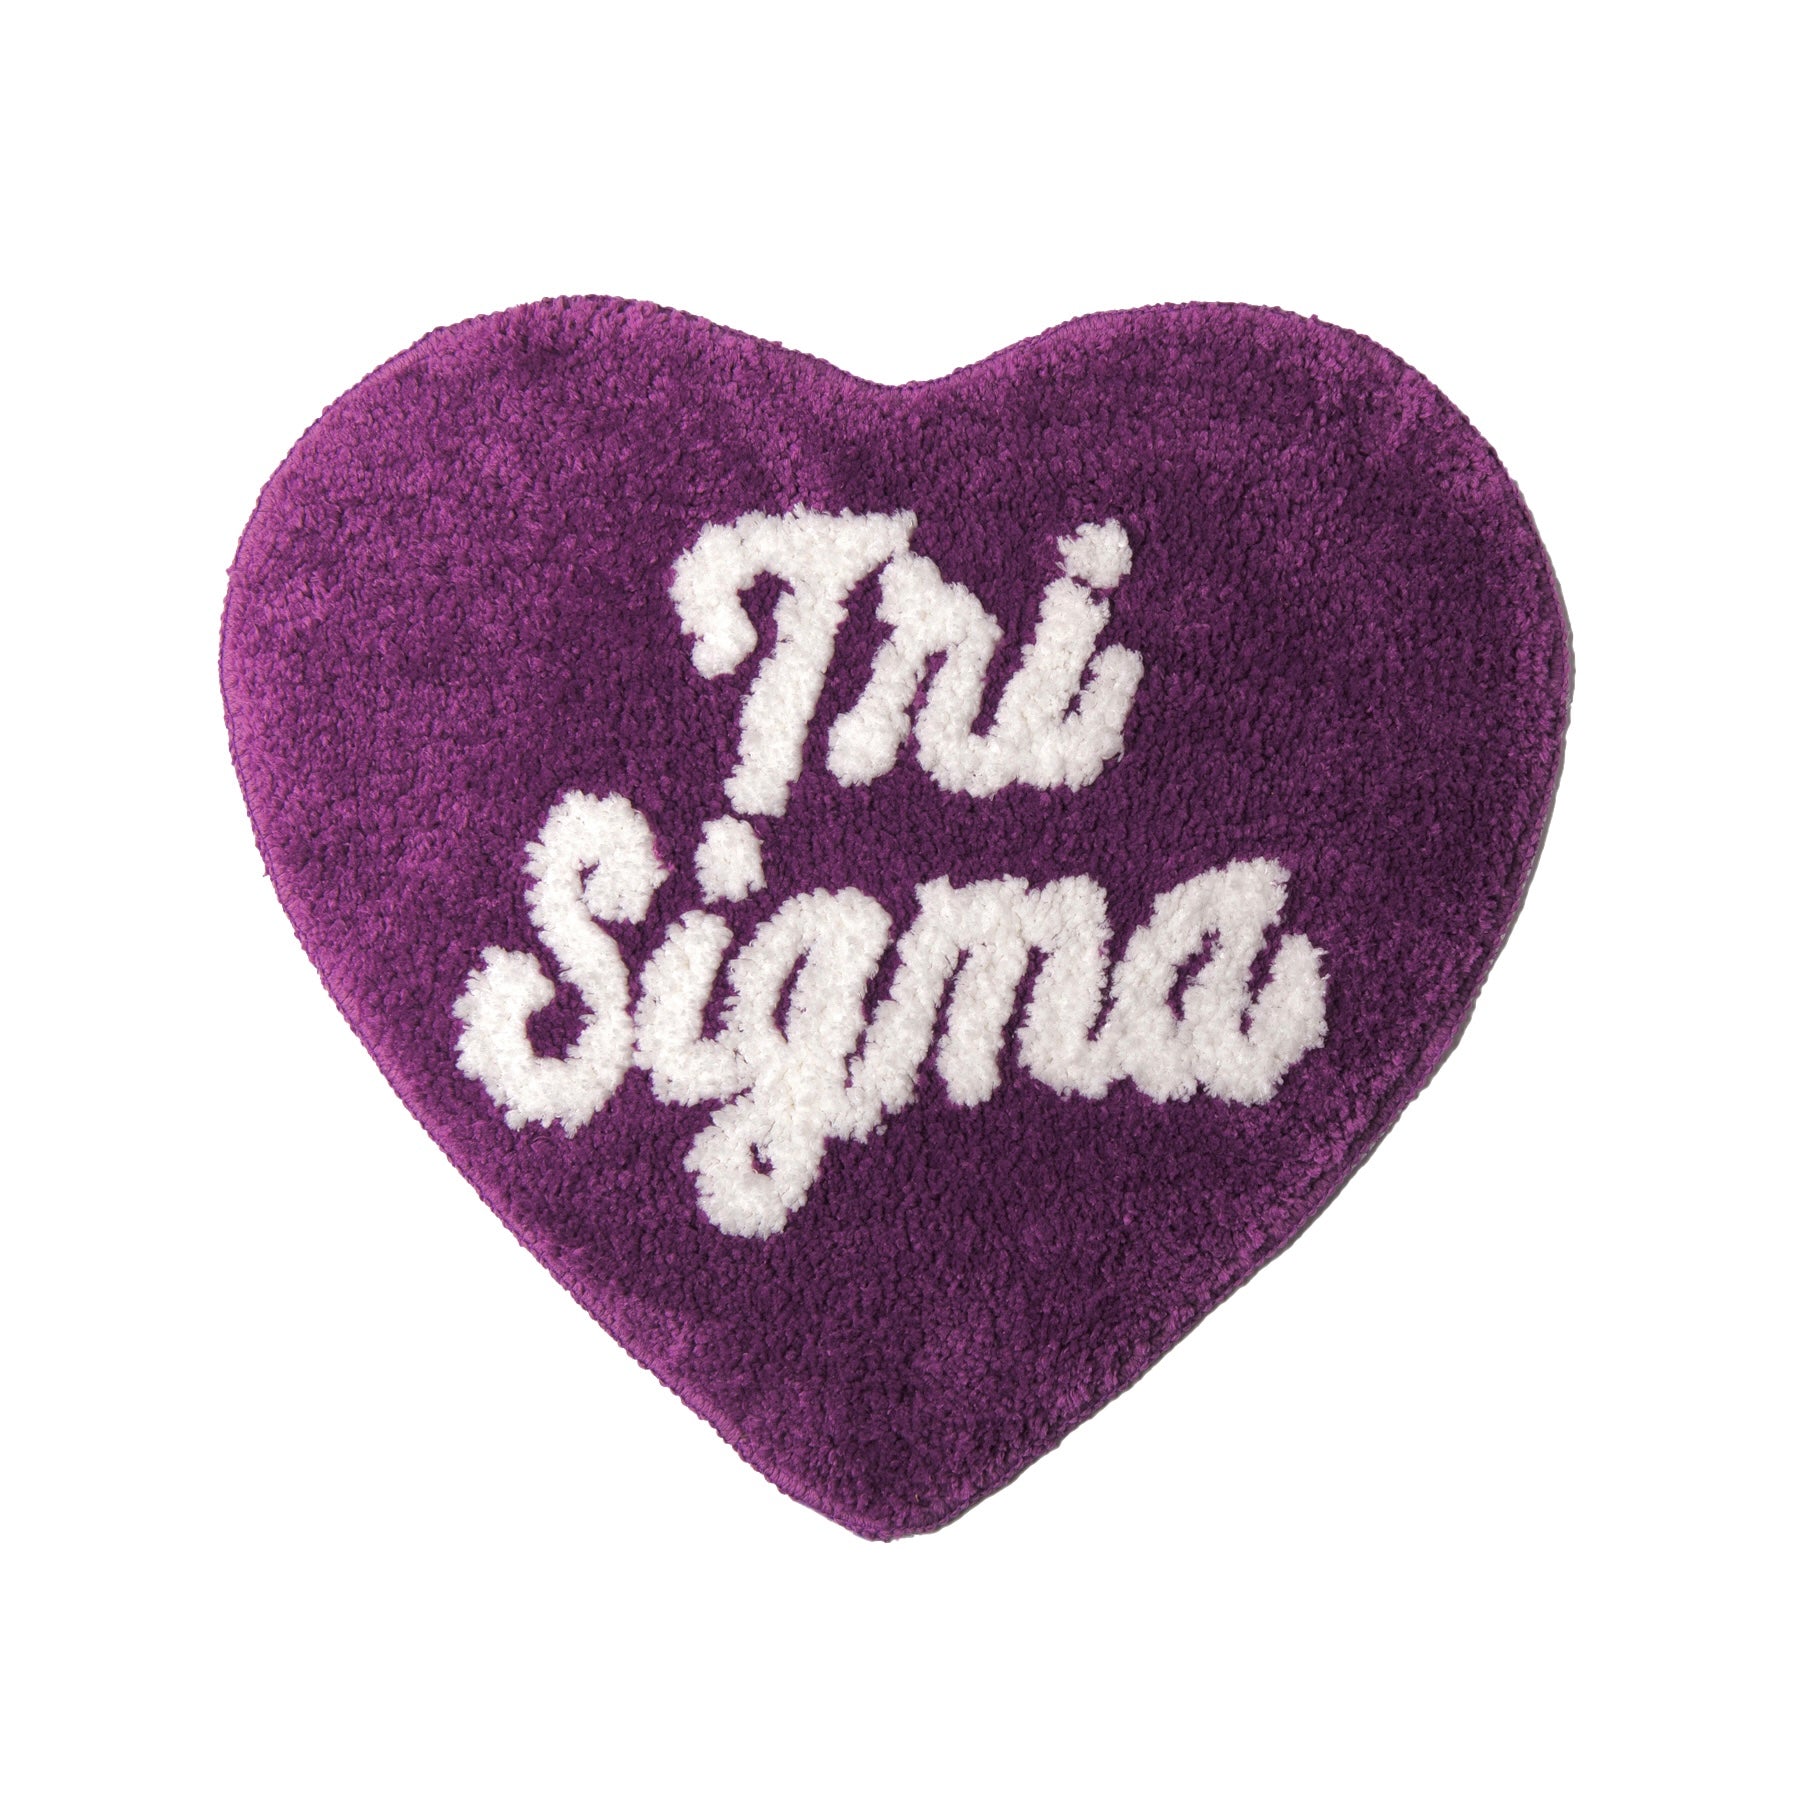 Tri-Sigma Heart Mini-Rug